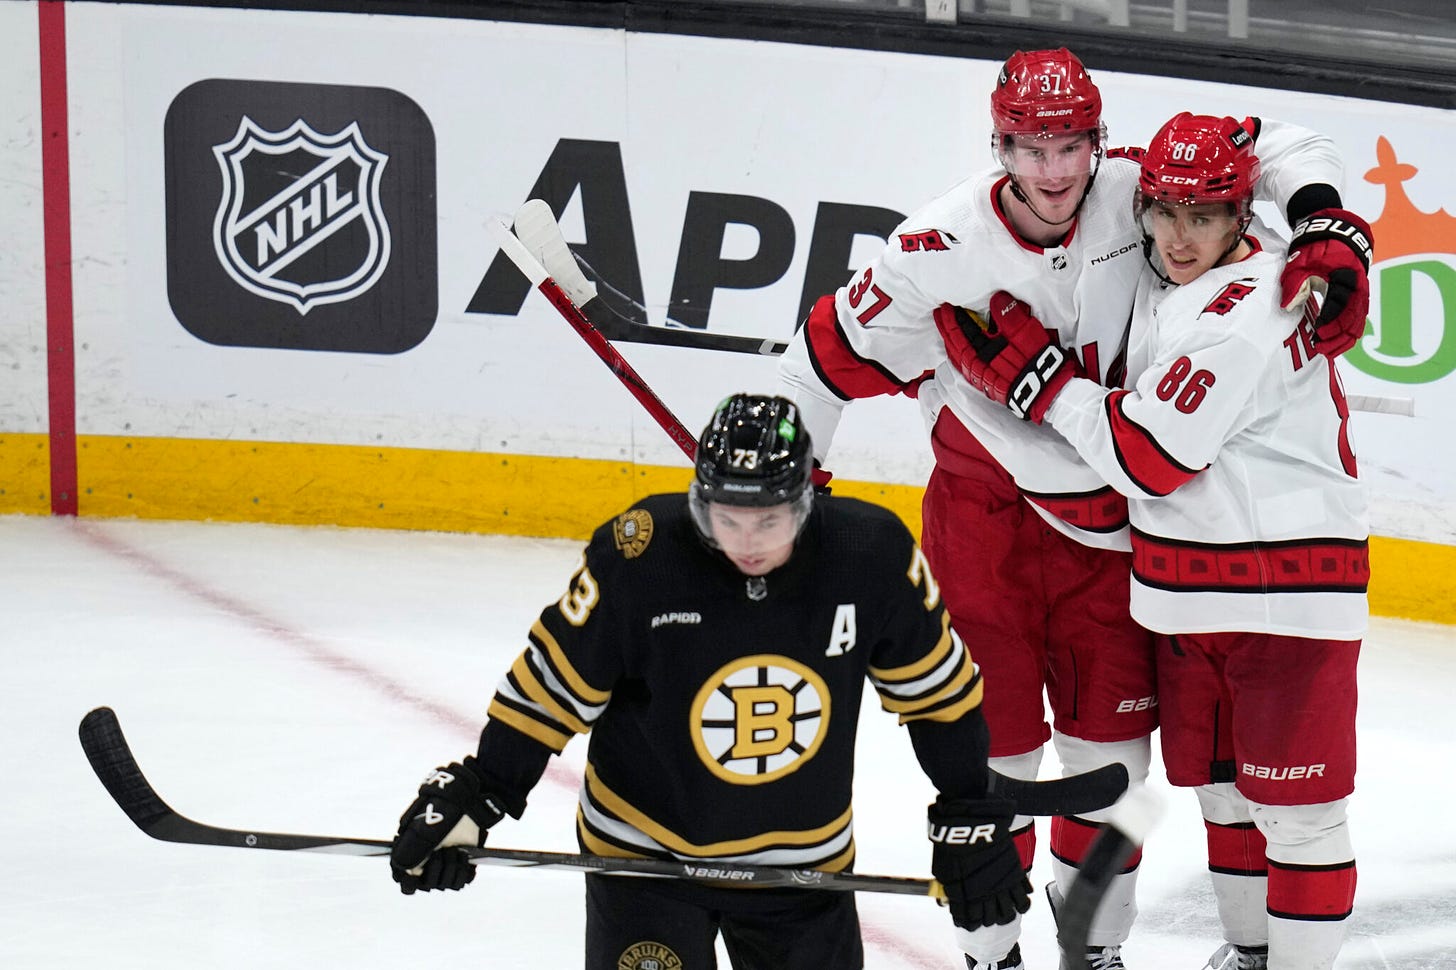 Andrei Svechnikov celebrates scoring a Michigan goal while a Bruins player skates off.